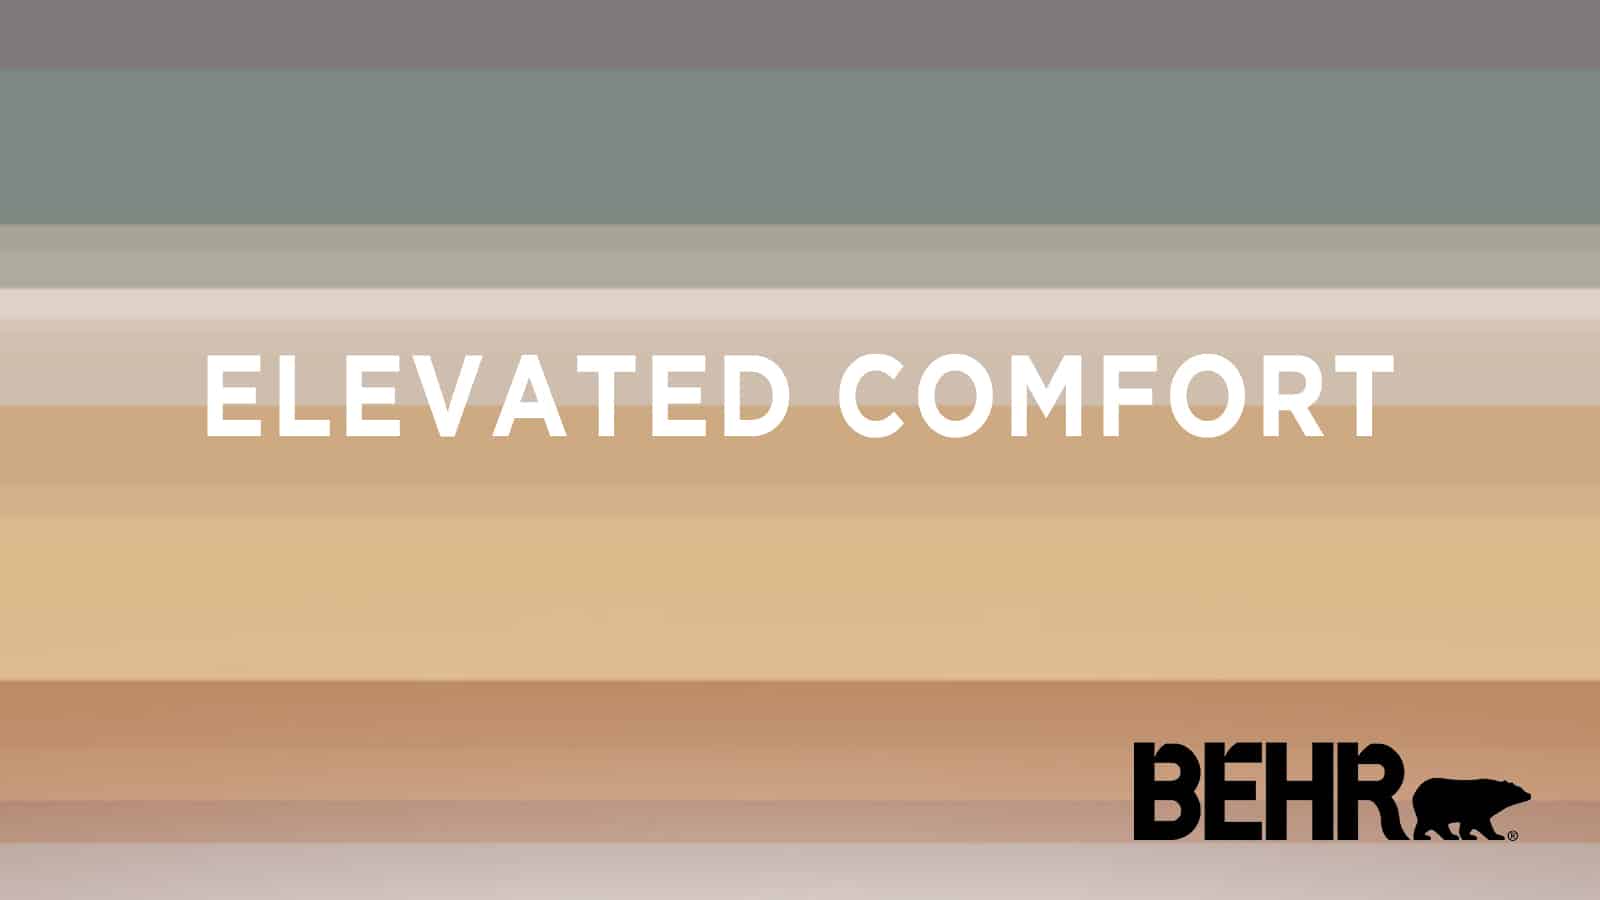 Behr – Elevated Comfort